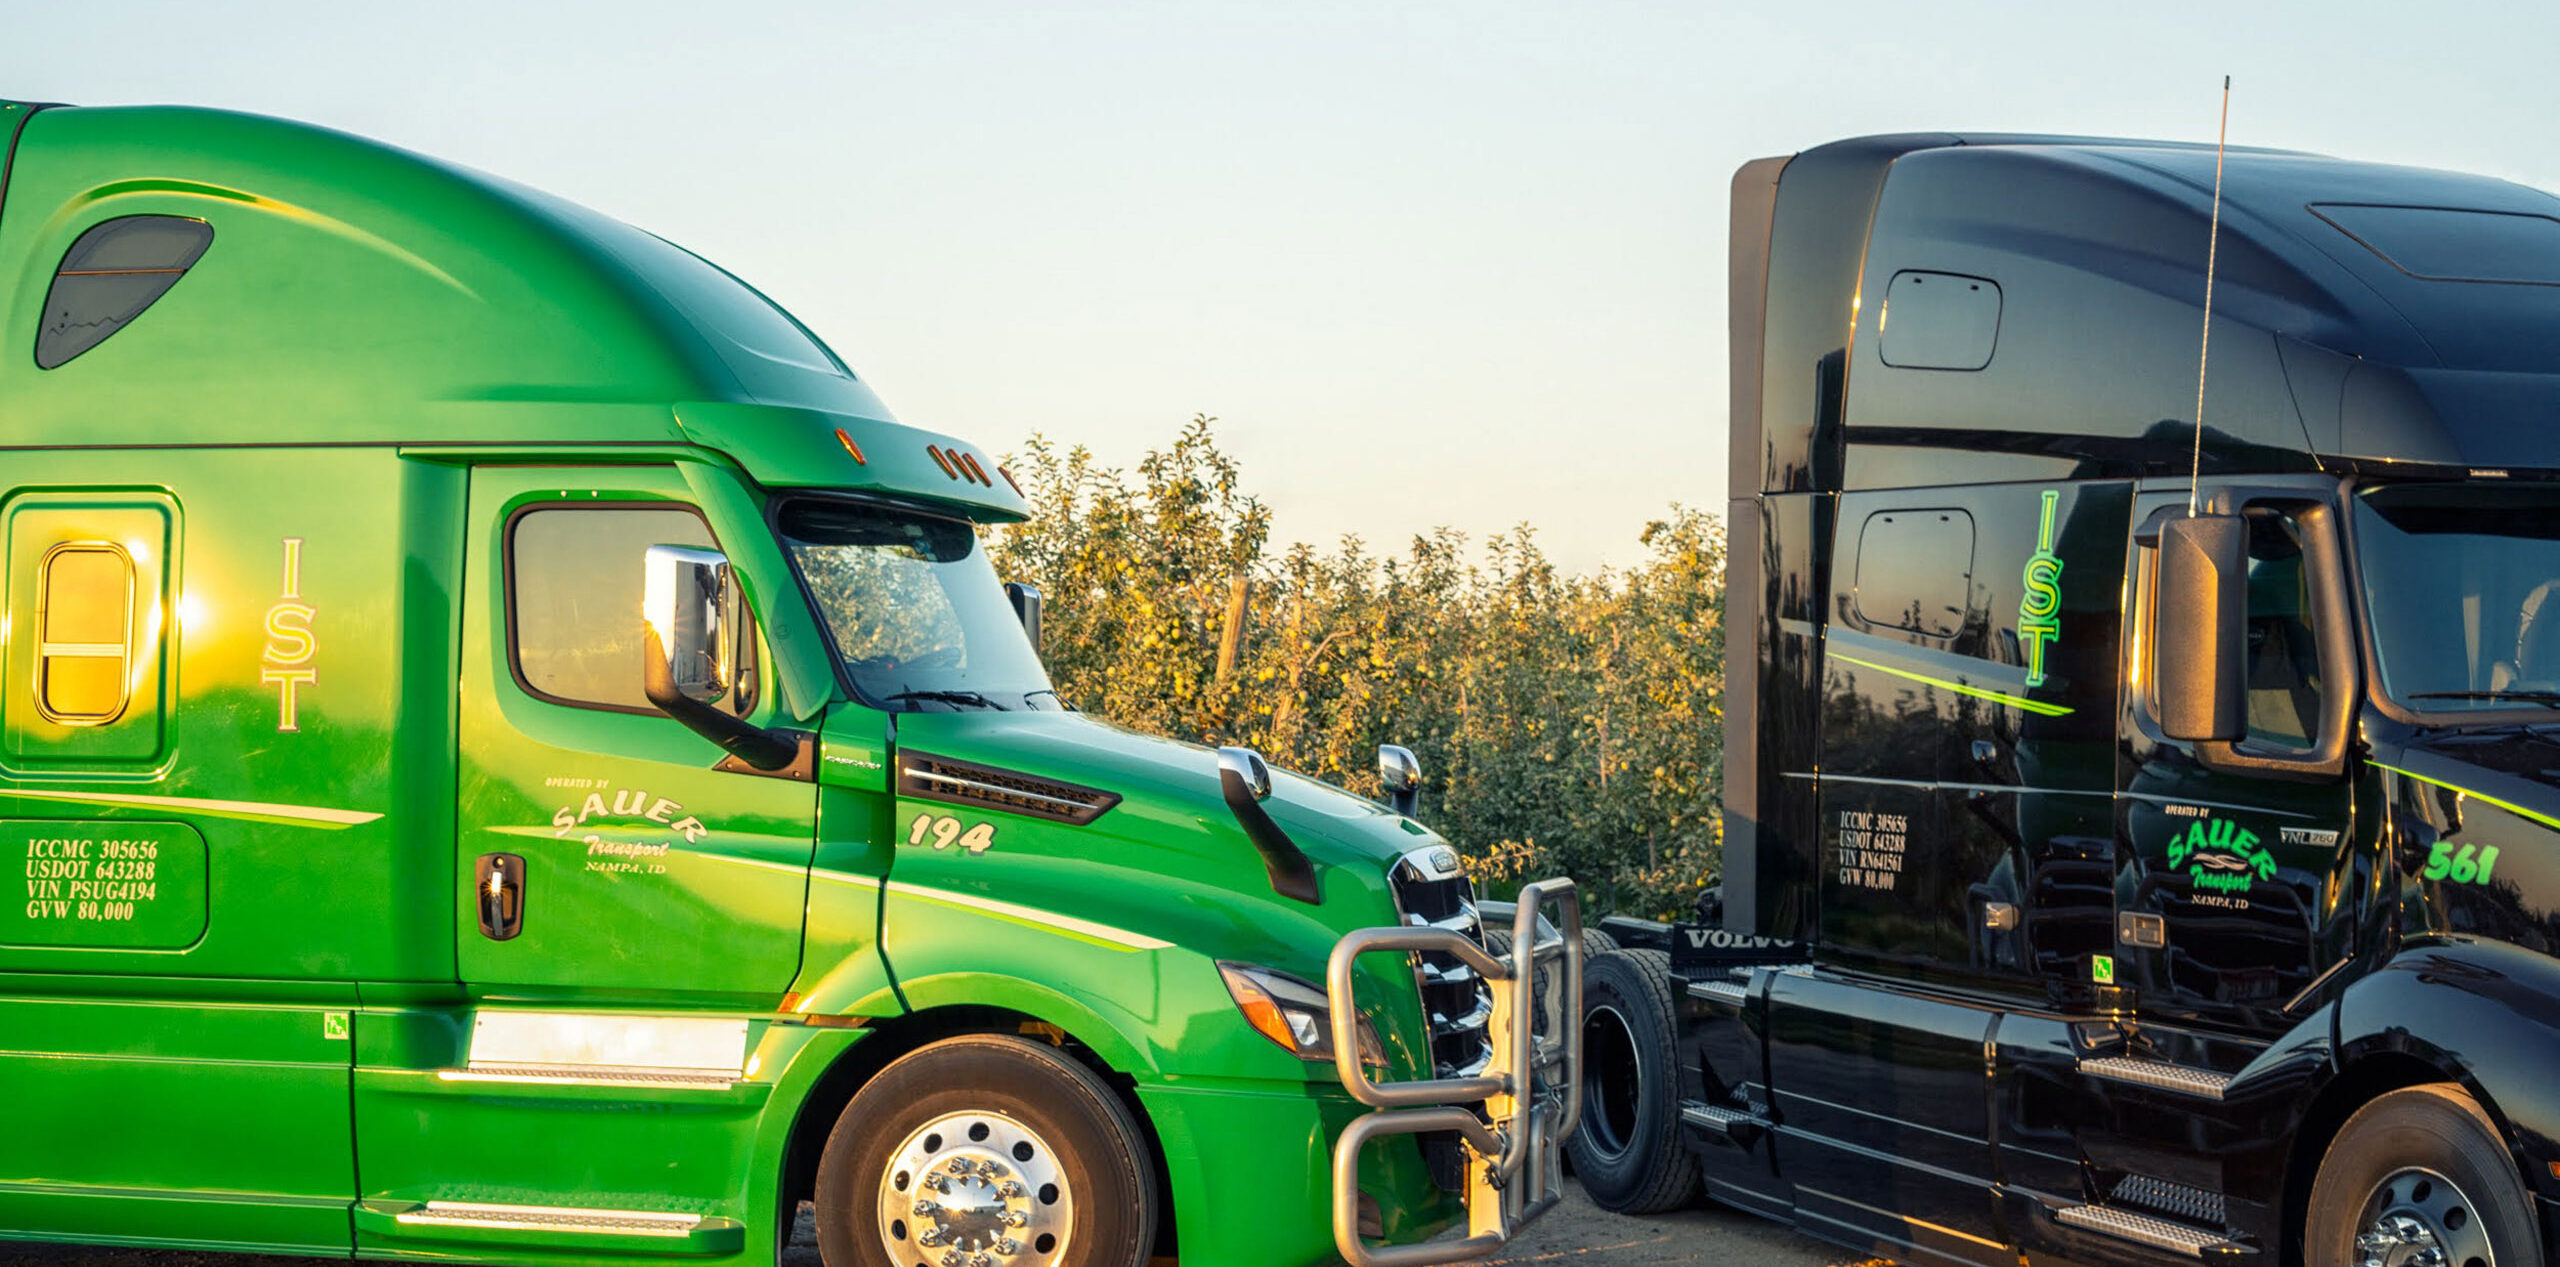 Two Idaho Specialized Transportation bobtail trucks, one black and one green